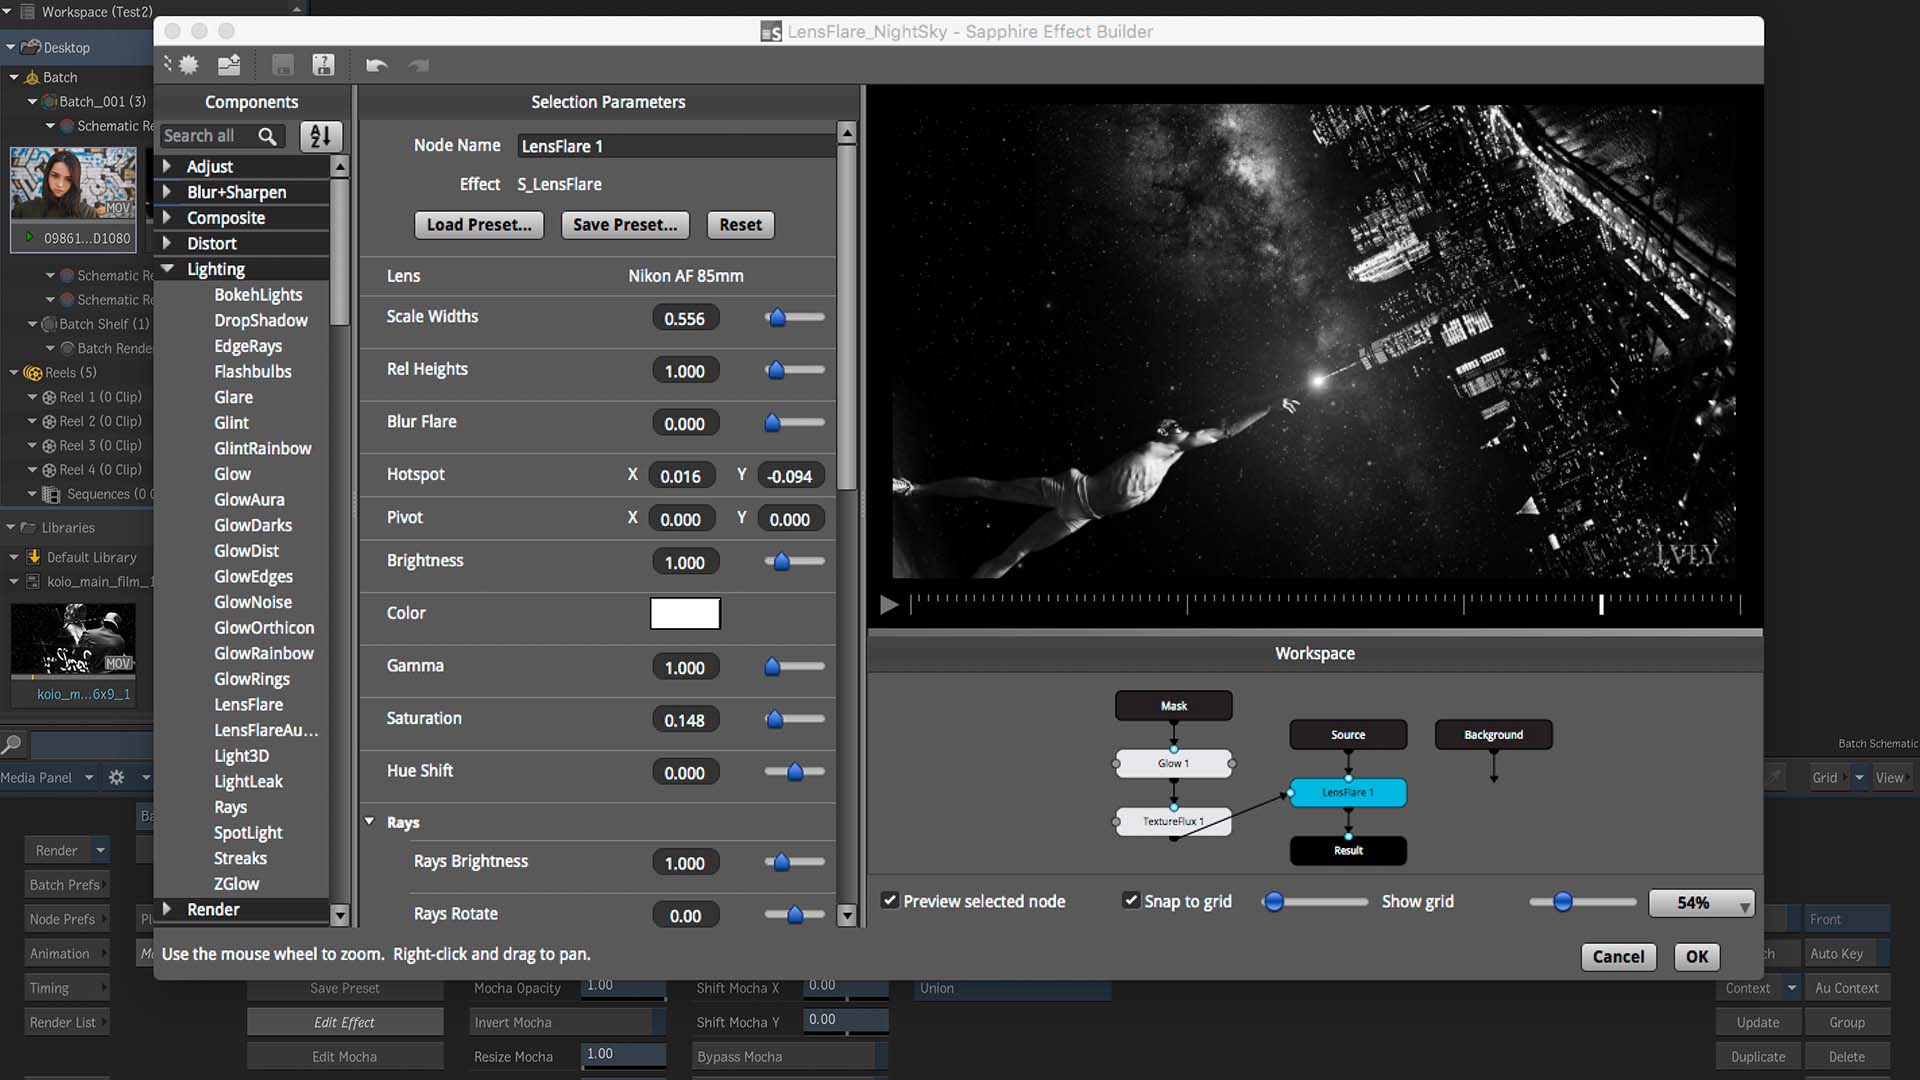 Sapphire VFX Builder inside Autodesk Flame 2020 interface